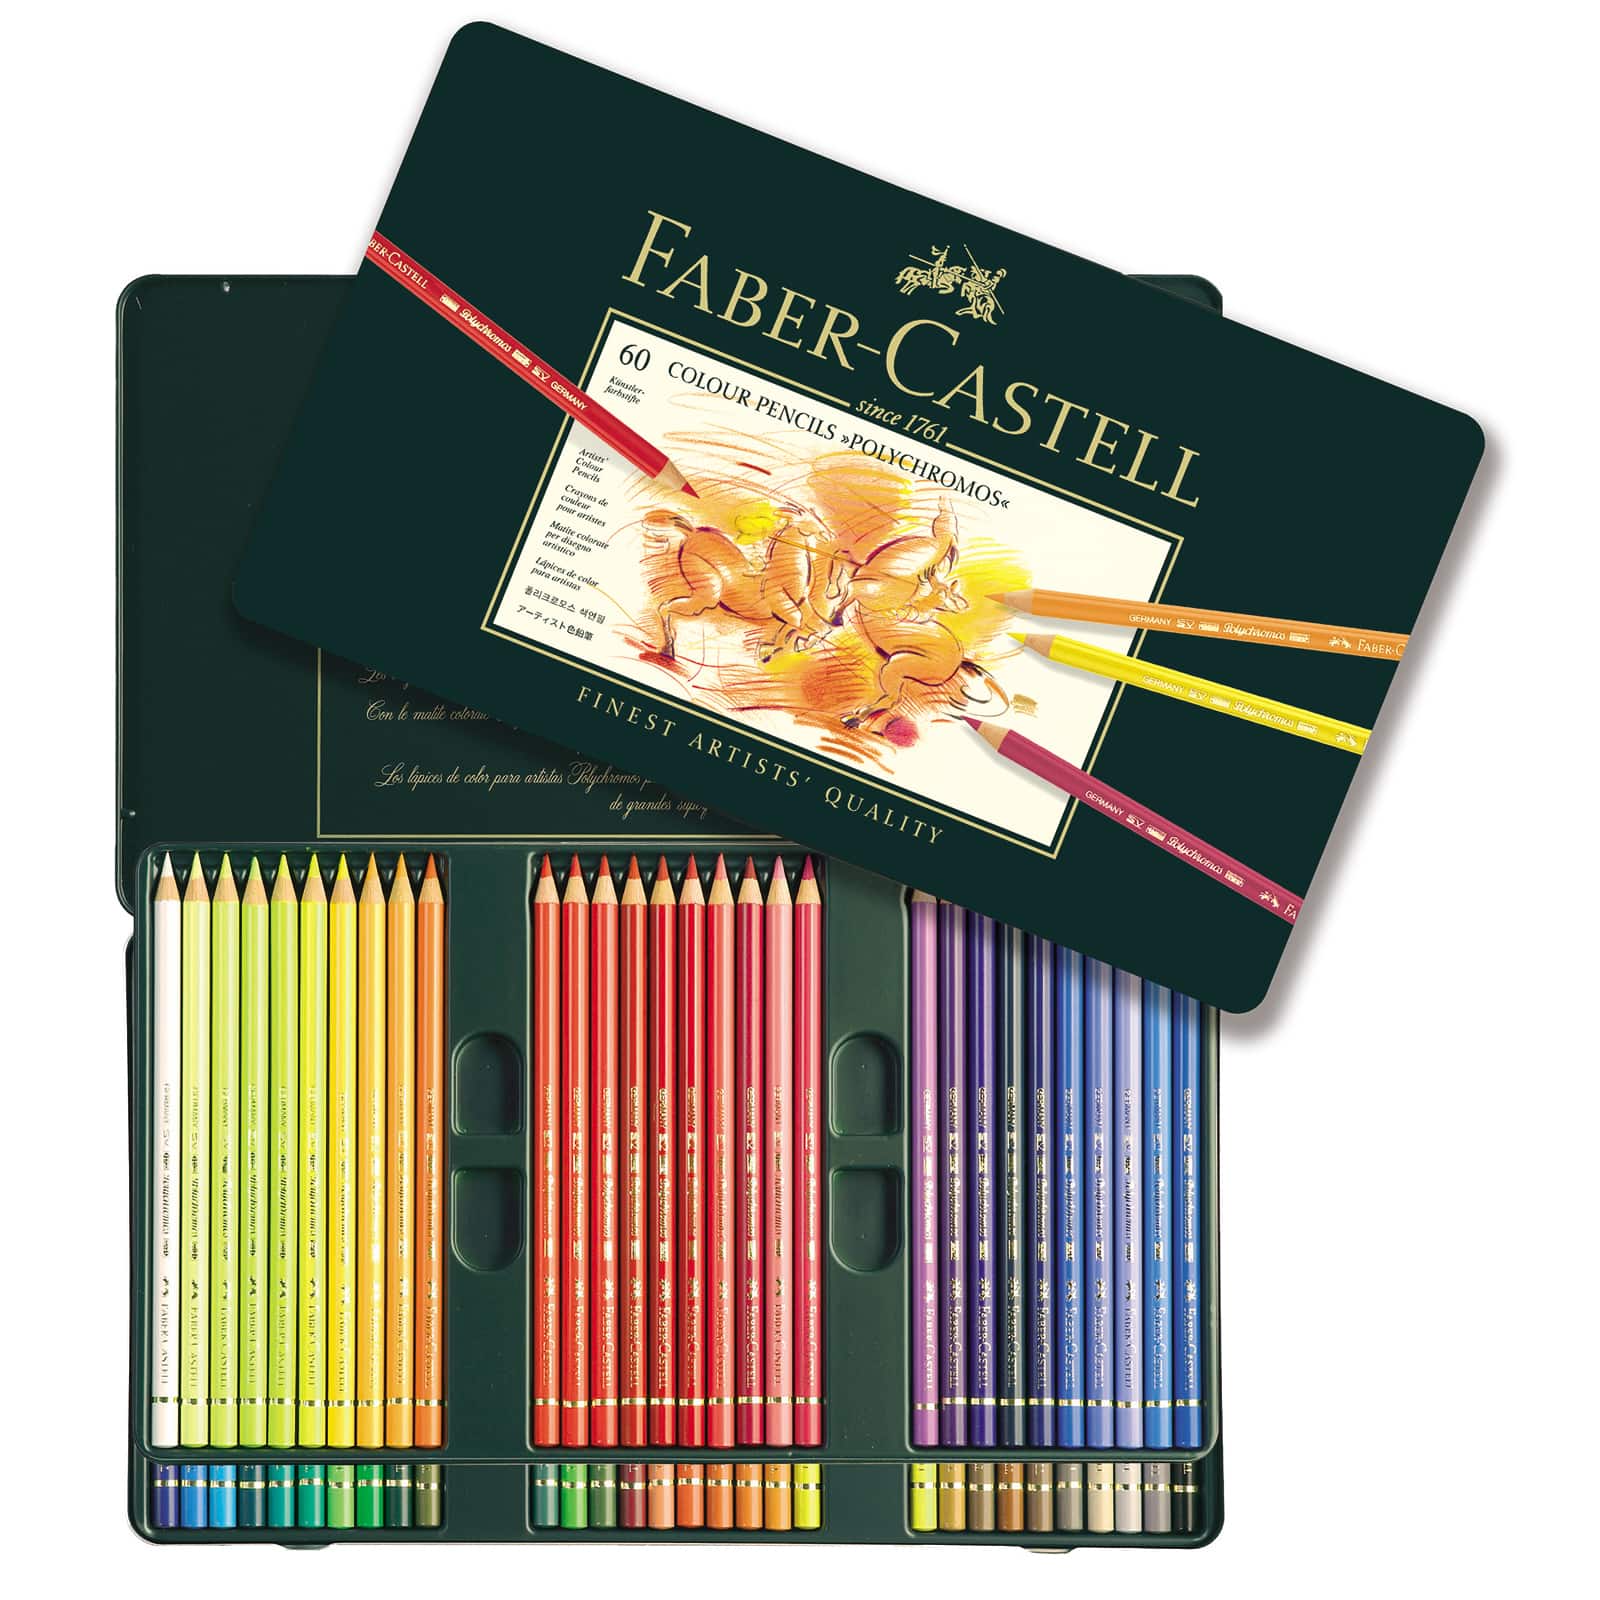 Faber-Castell Polychromos Tin Set of 60 Colored Pencils